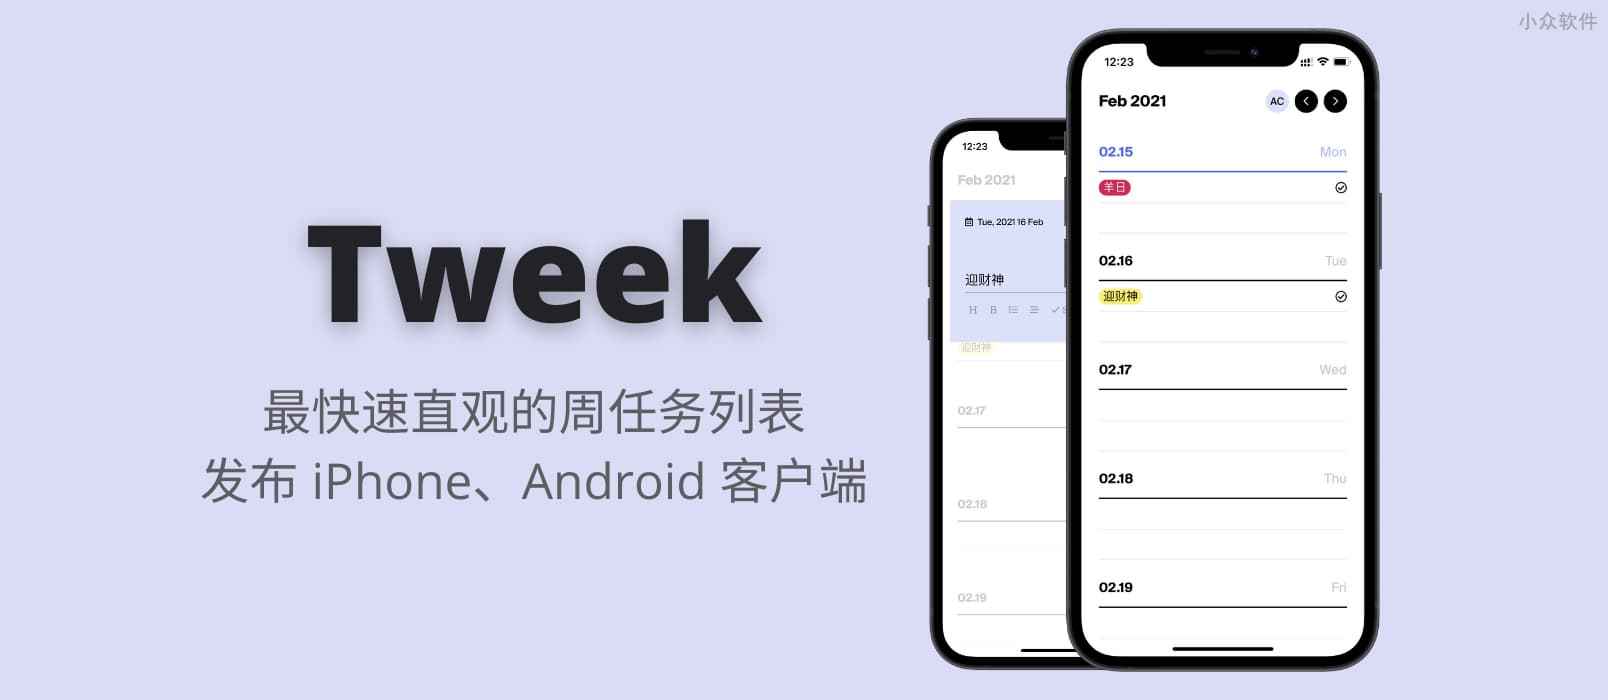 Tweek – 最快速直观的周任务列表发布 iPhone、Android 客户端